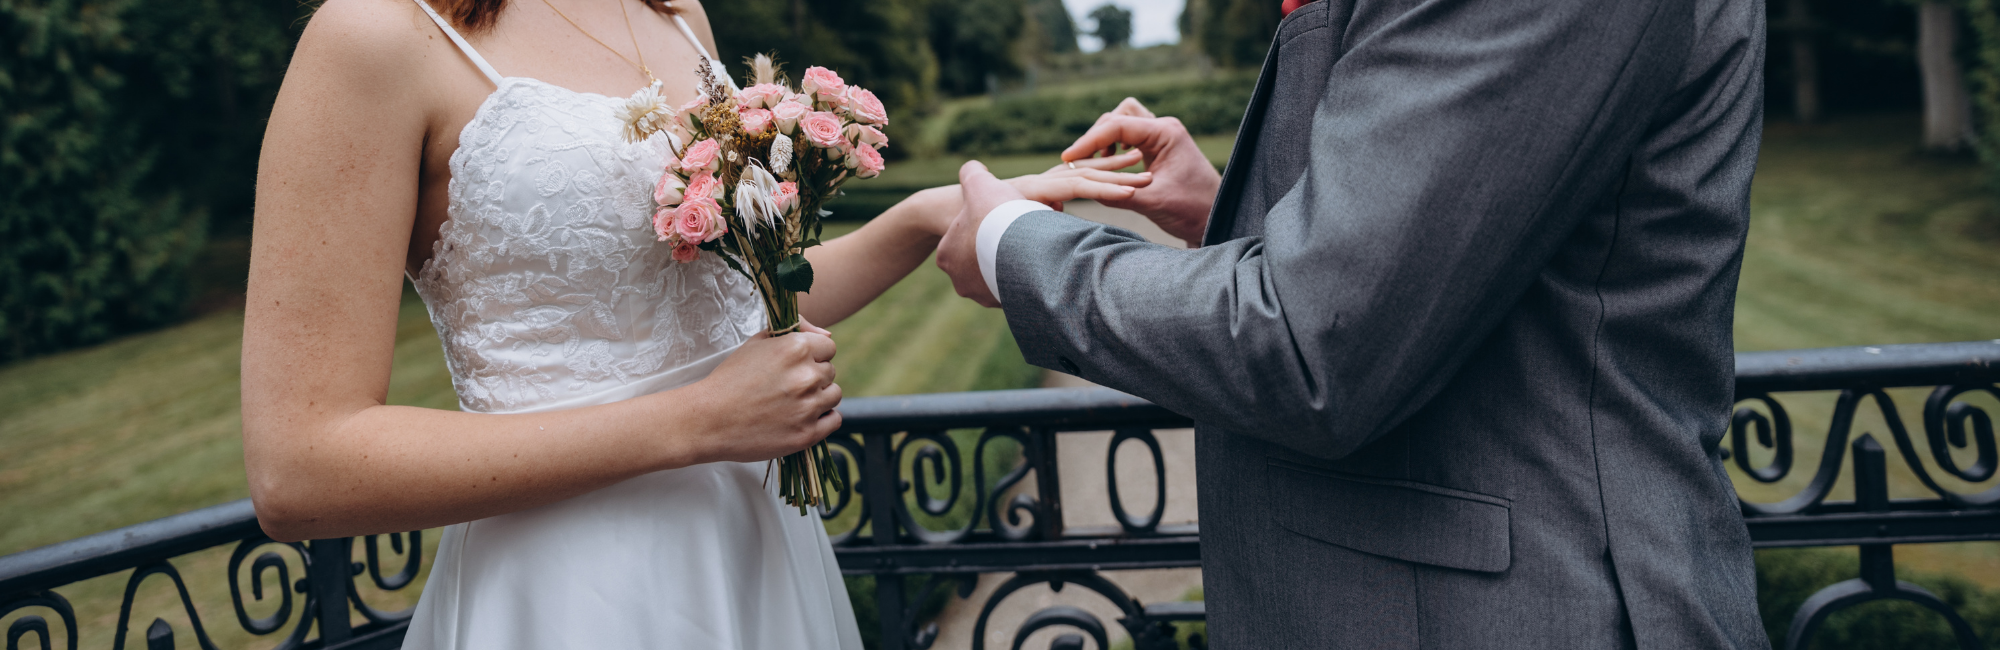 groom placing a wedding ring on bride's finger